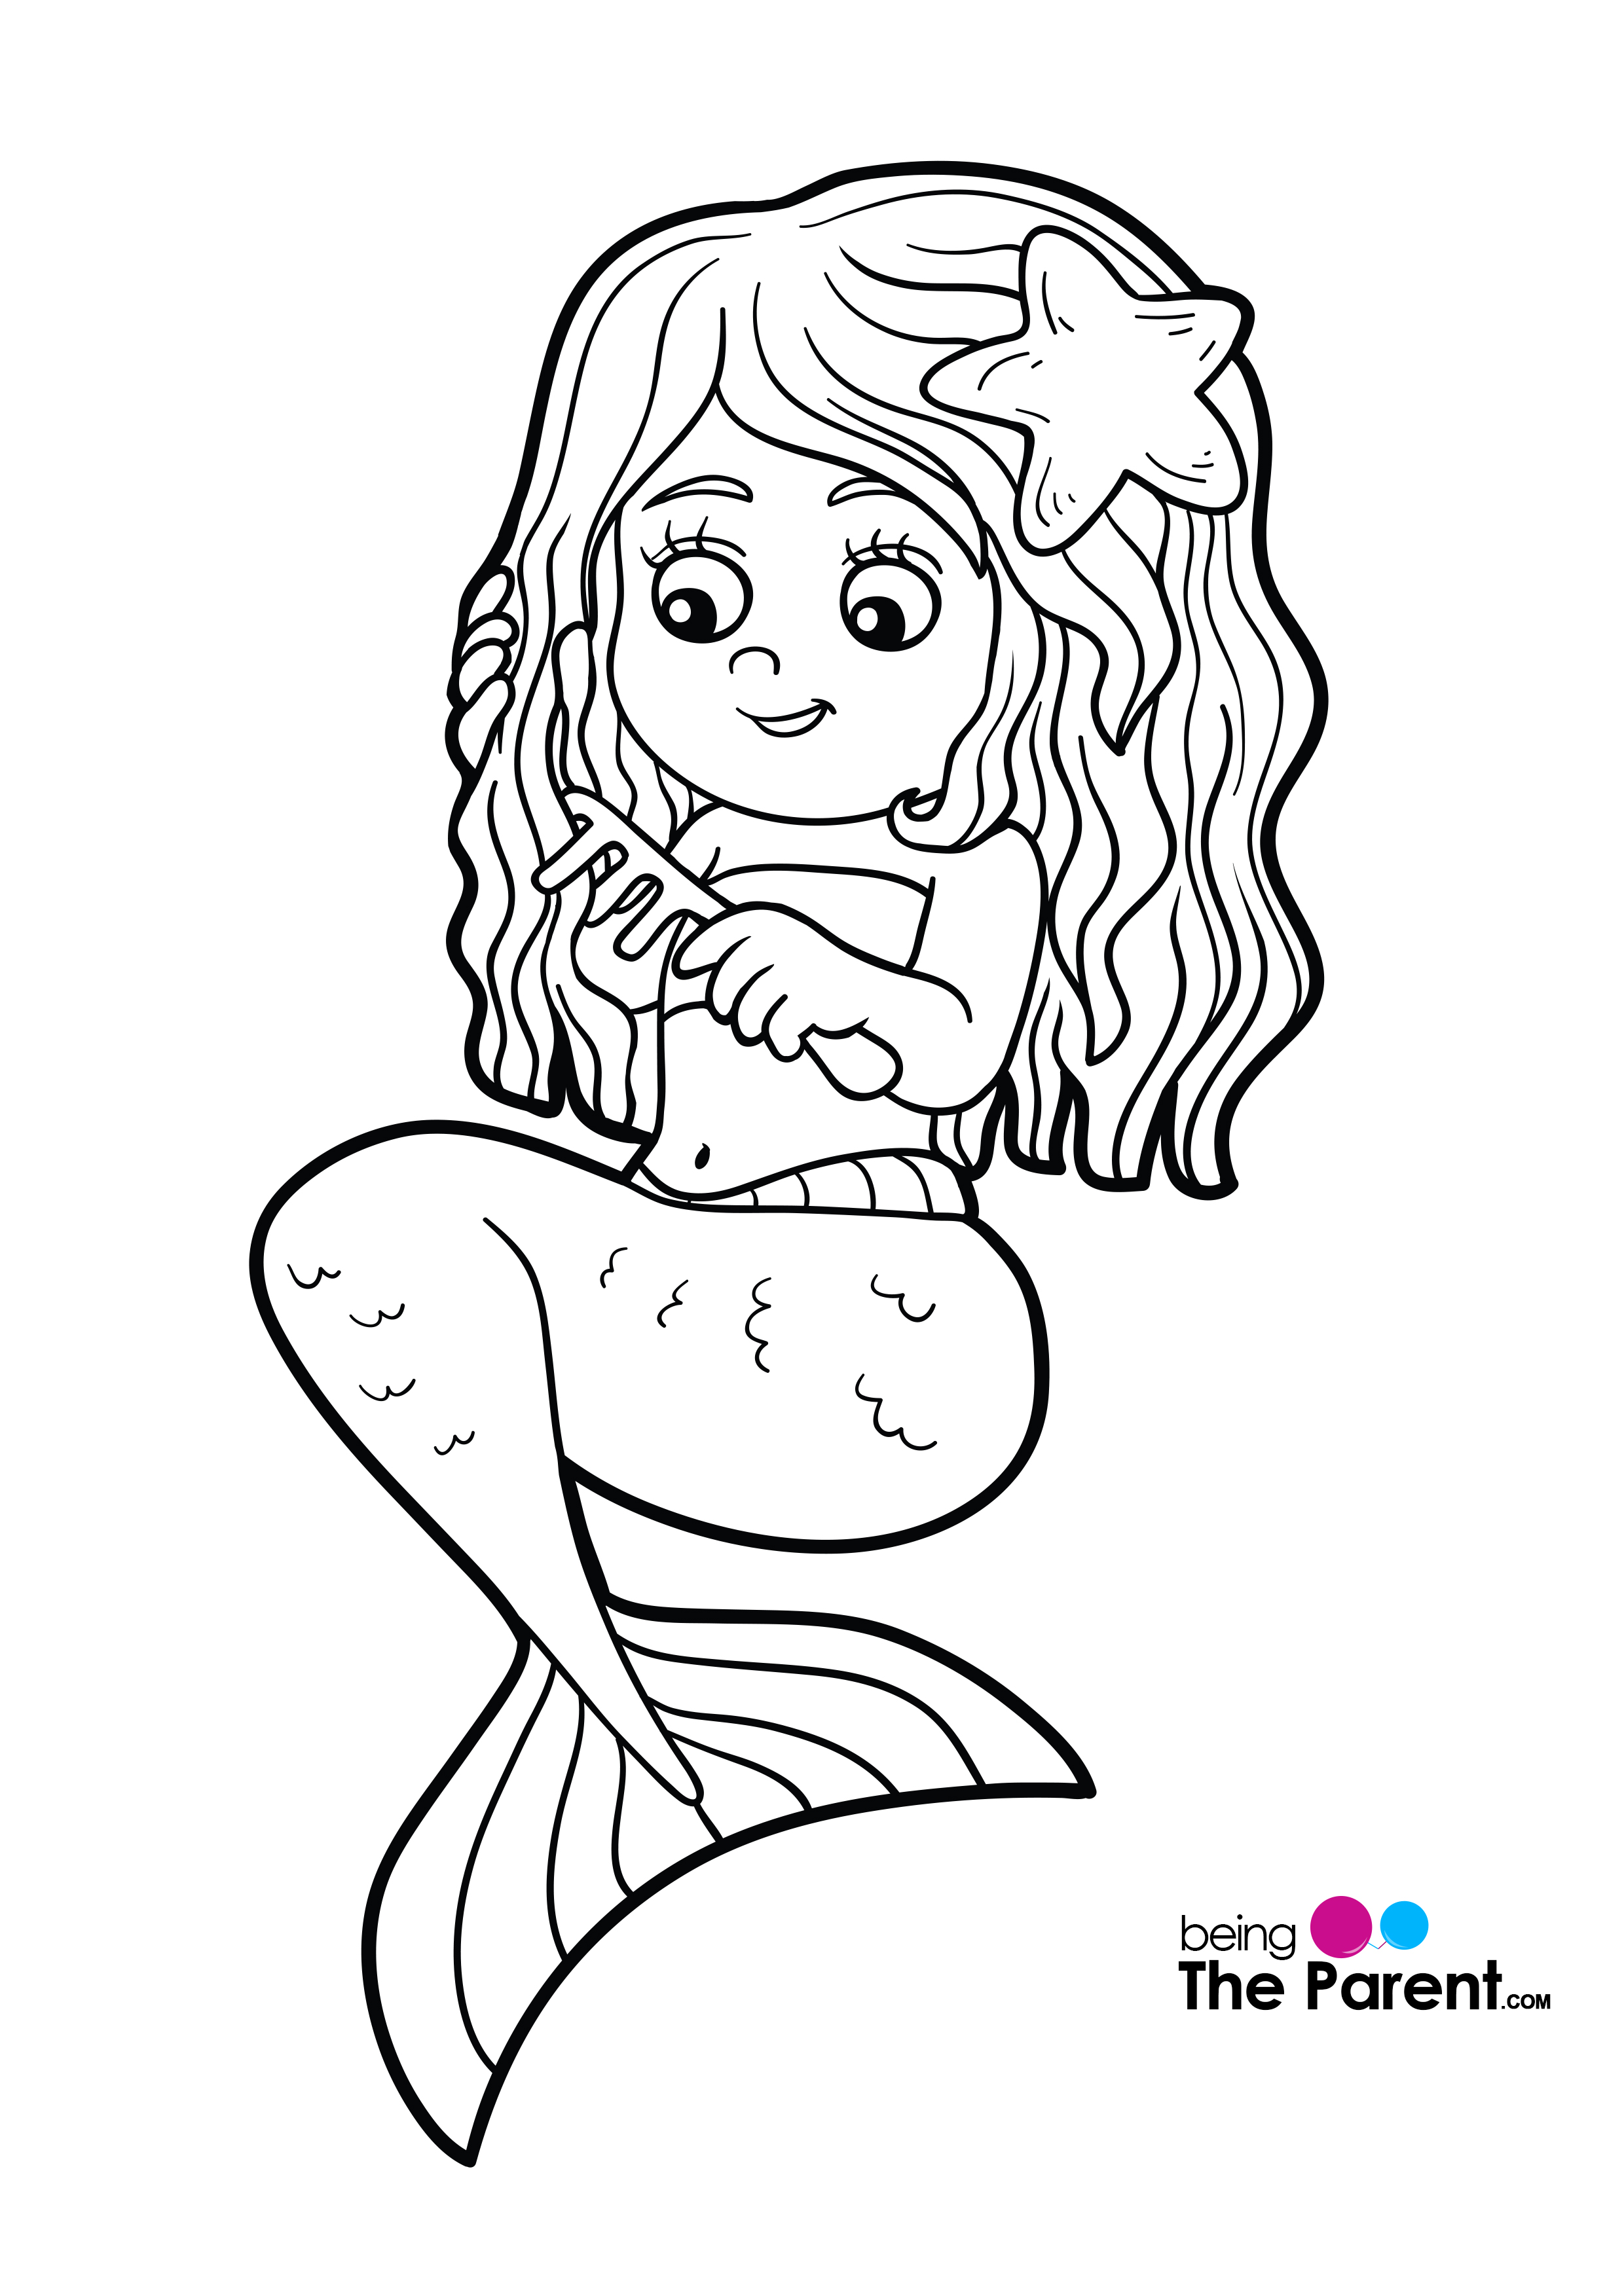 coloring page mermaid mermaid coloring pages coloring pages to print mermaid page coloring 